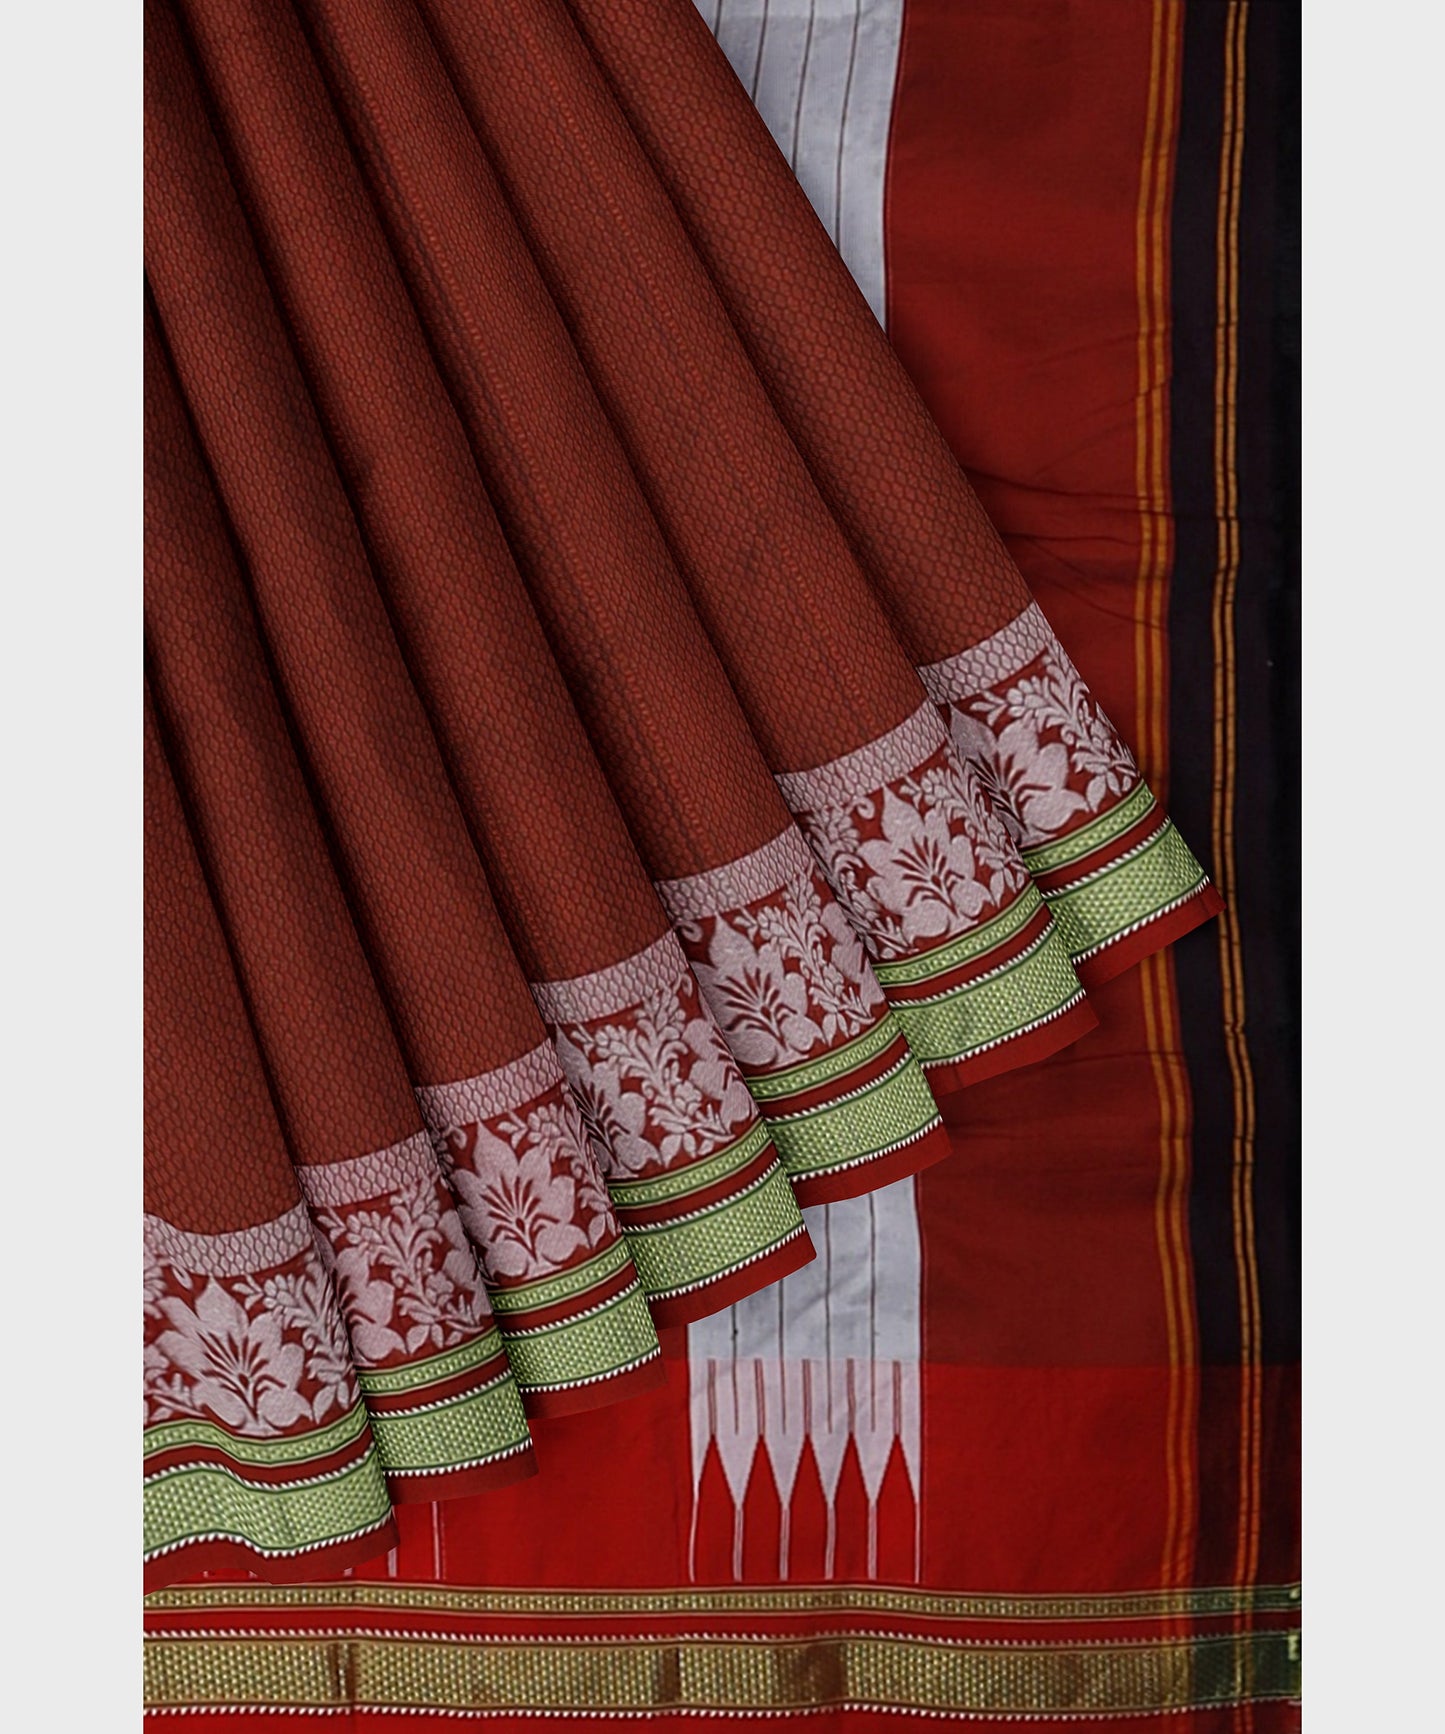 Traditional Khana Saree - Maroon Woven Body with Red and Silver Patti Design and Red Border freeshipping - Shreni Samudaya